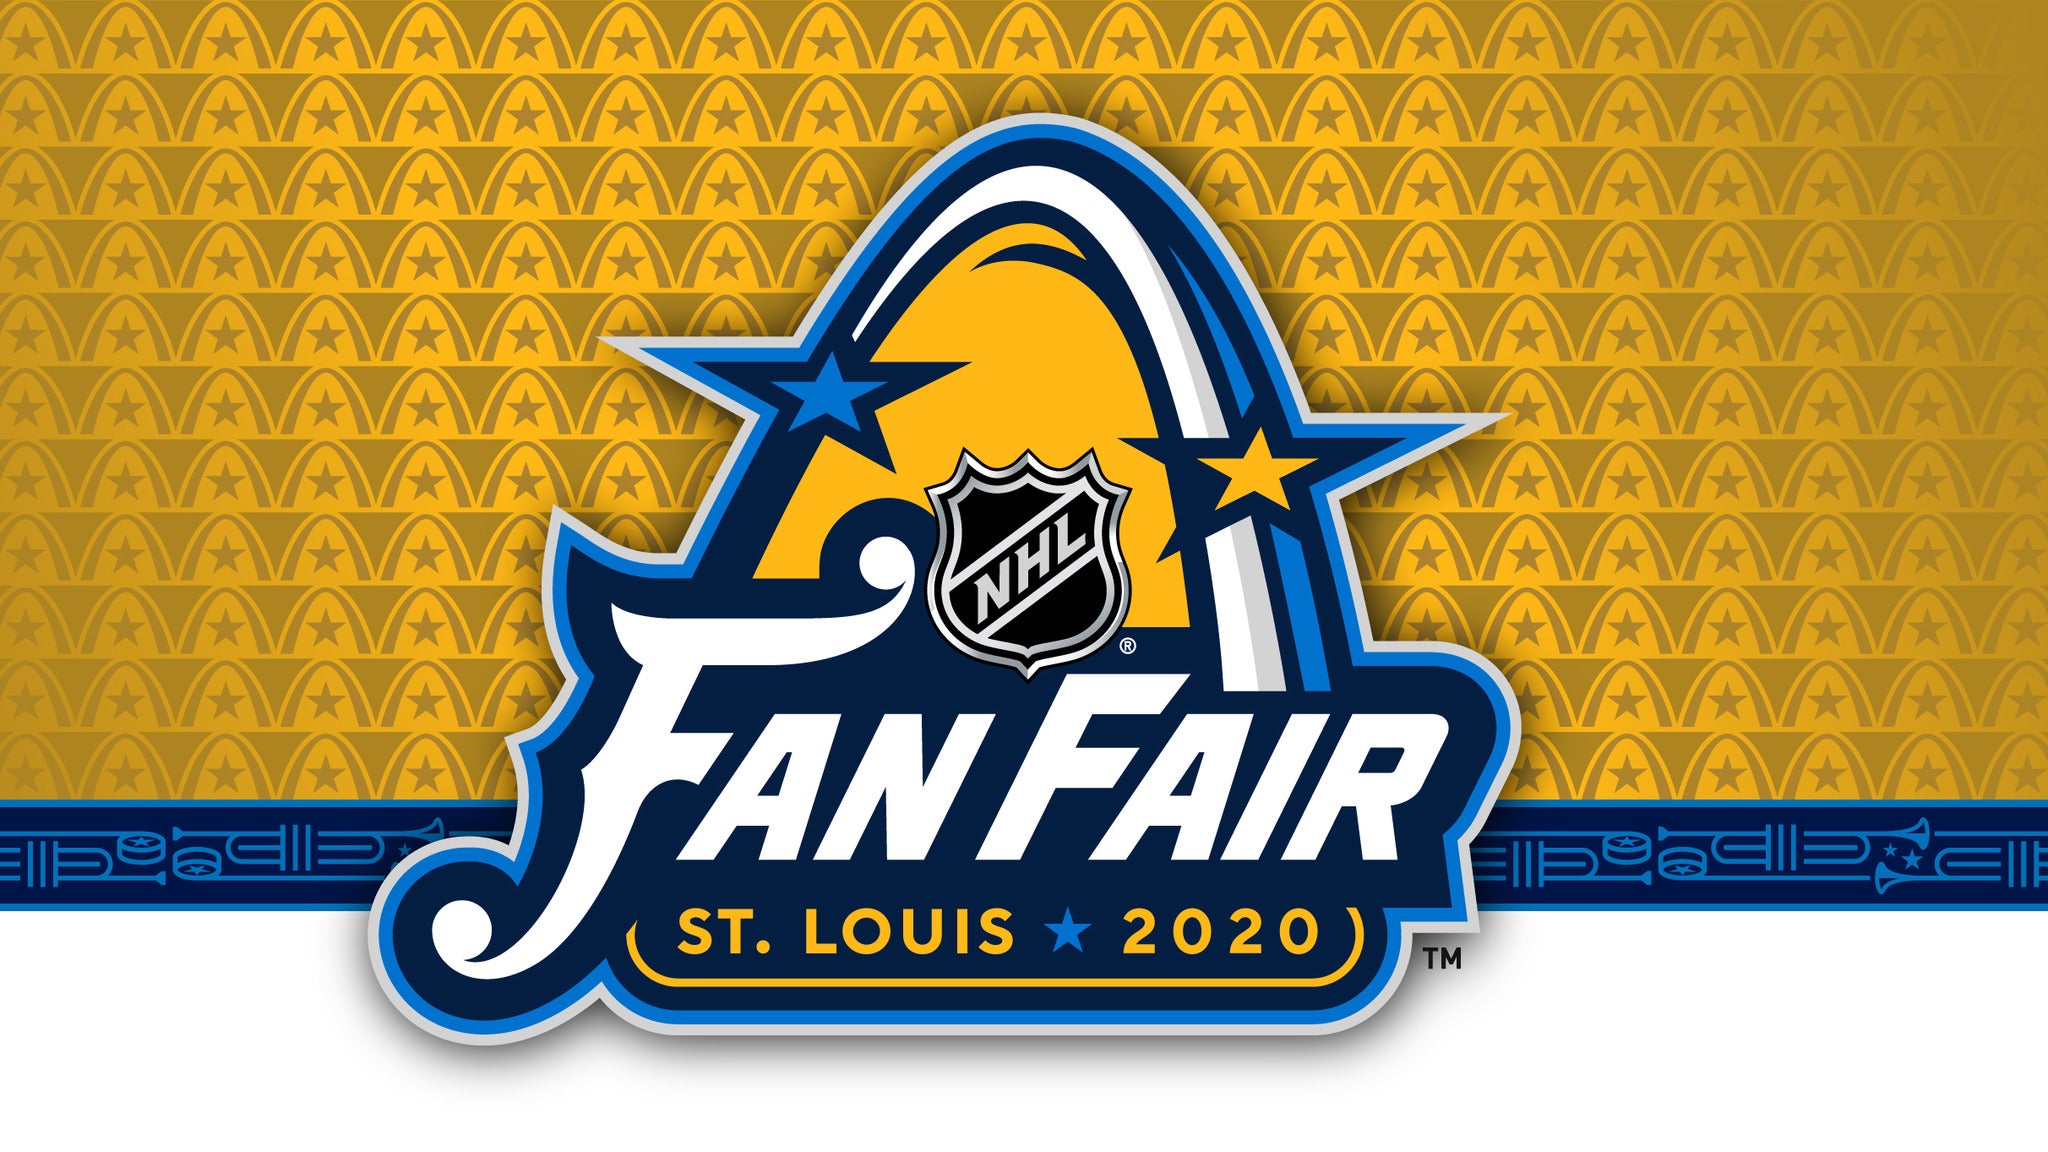 NHL Fan Fair Tickets | Single Game Tickets & Schedule | www.bagssaleusa.com